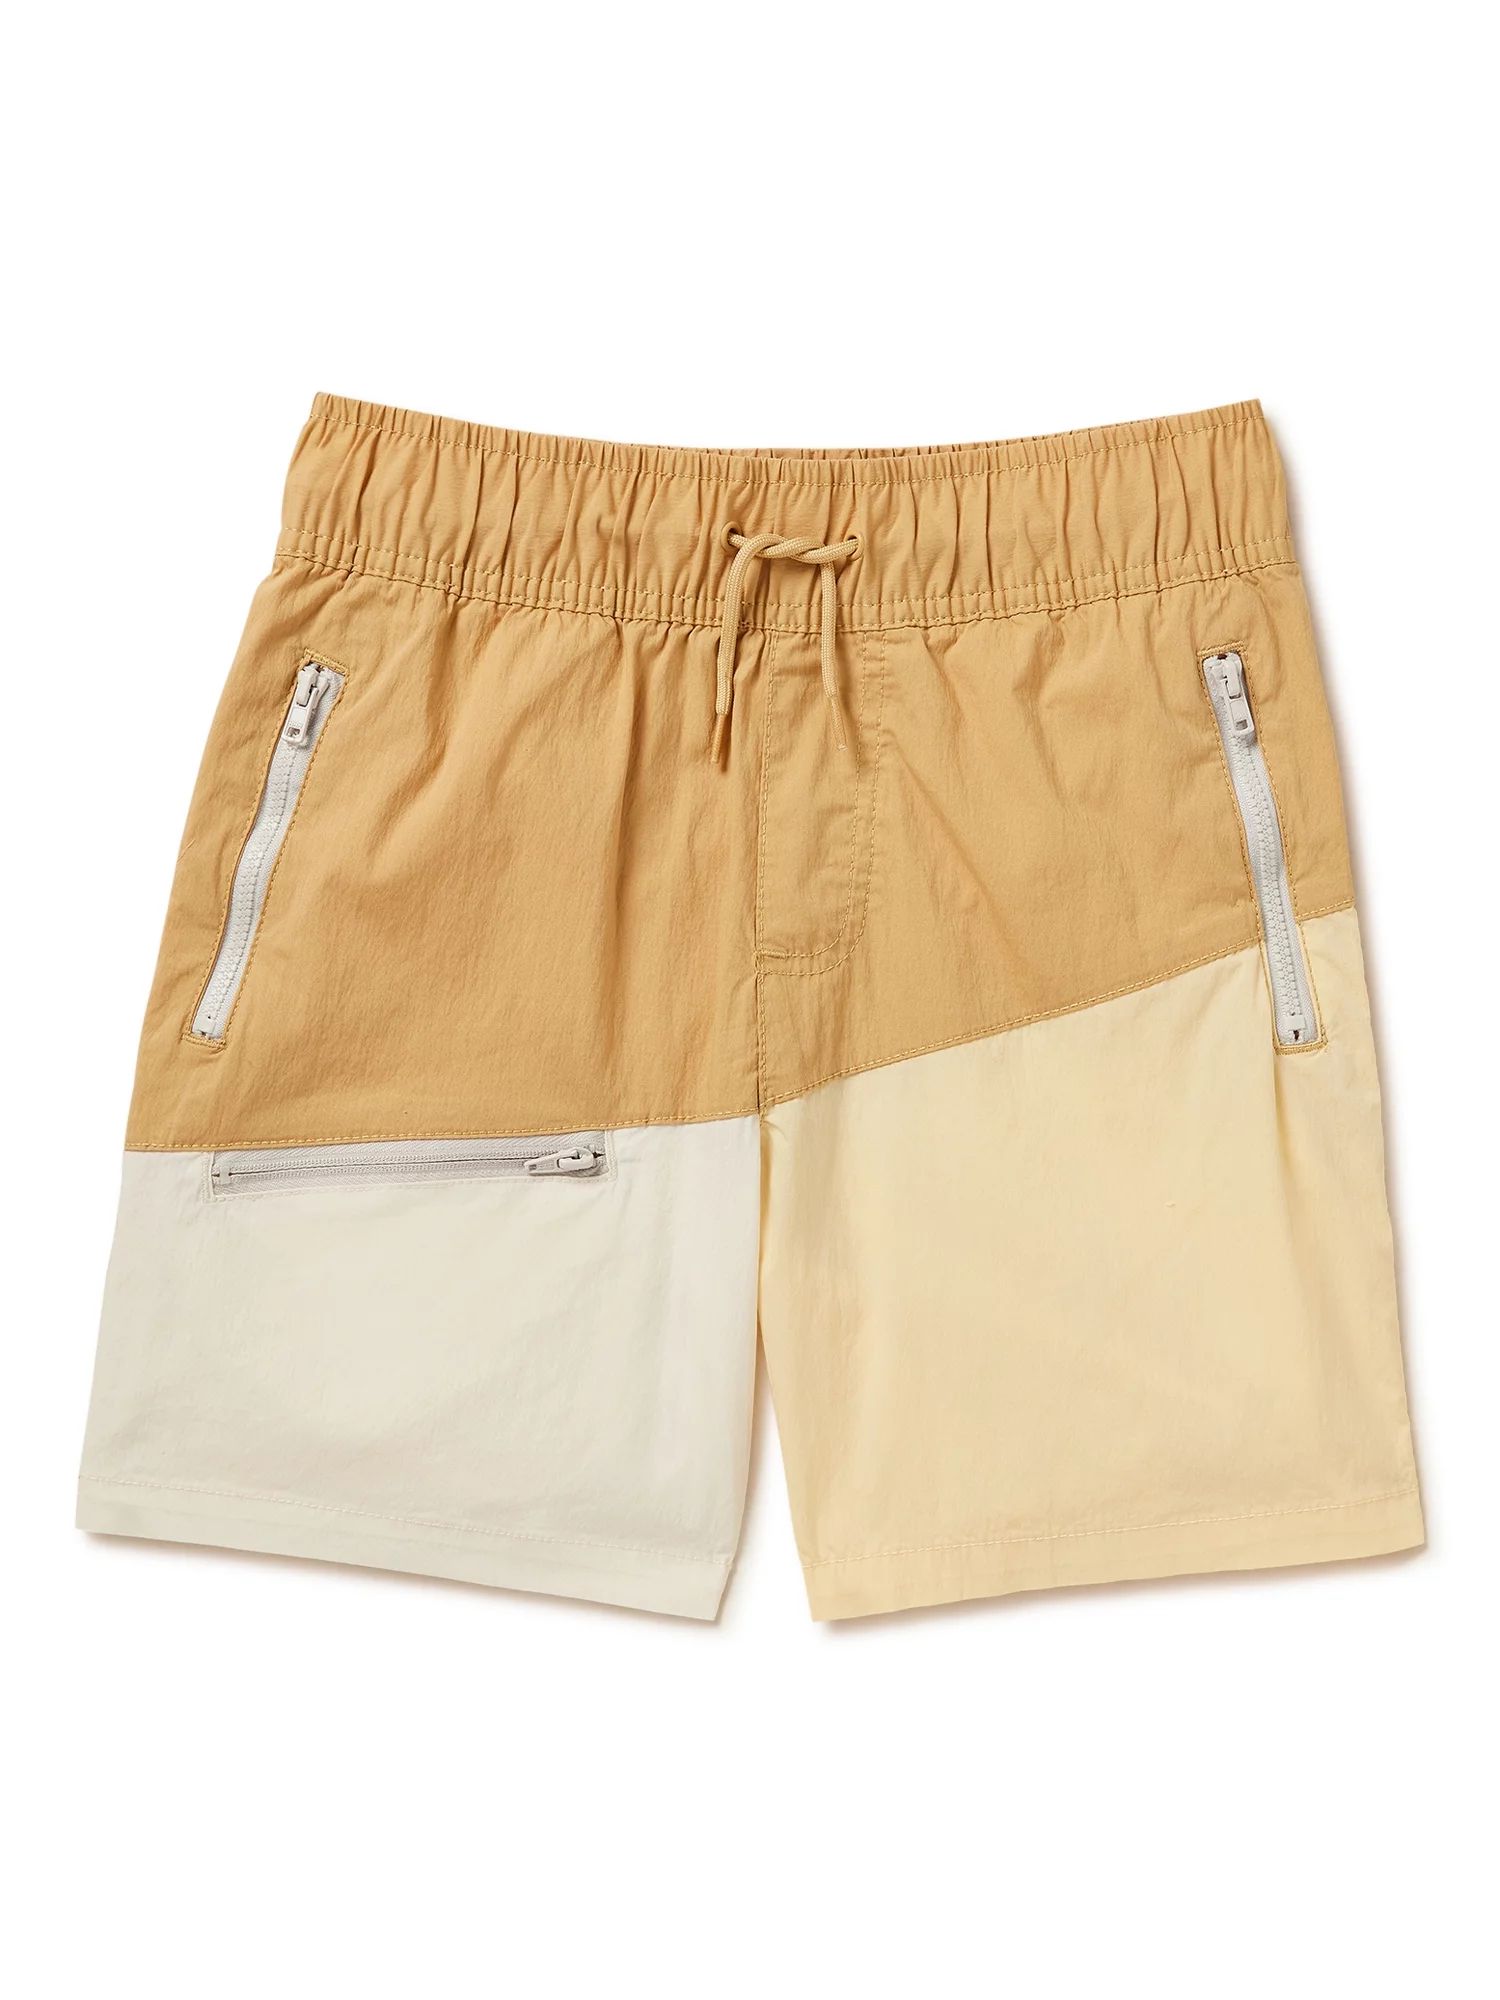 Wonder Nation Boys Wear Now Shorts, Sizes 4-18 & Husky | Walmart (US)